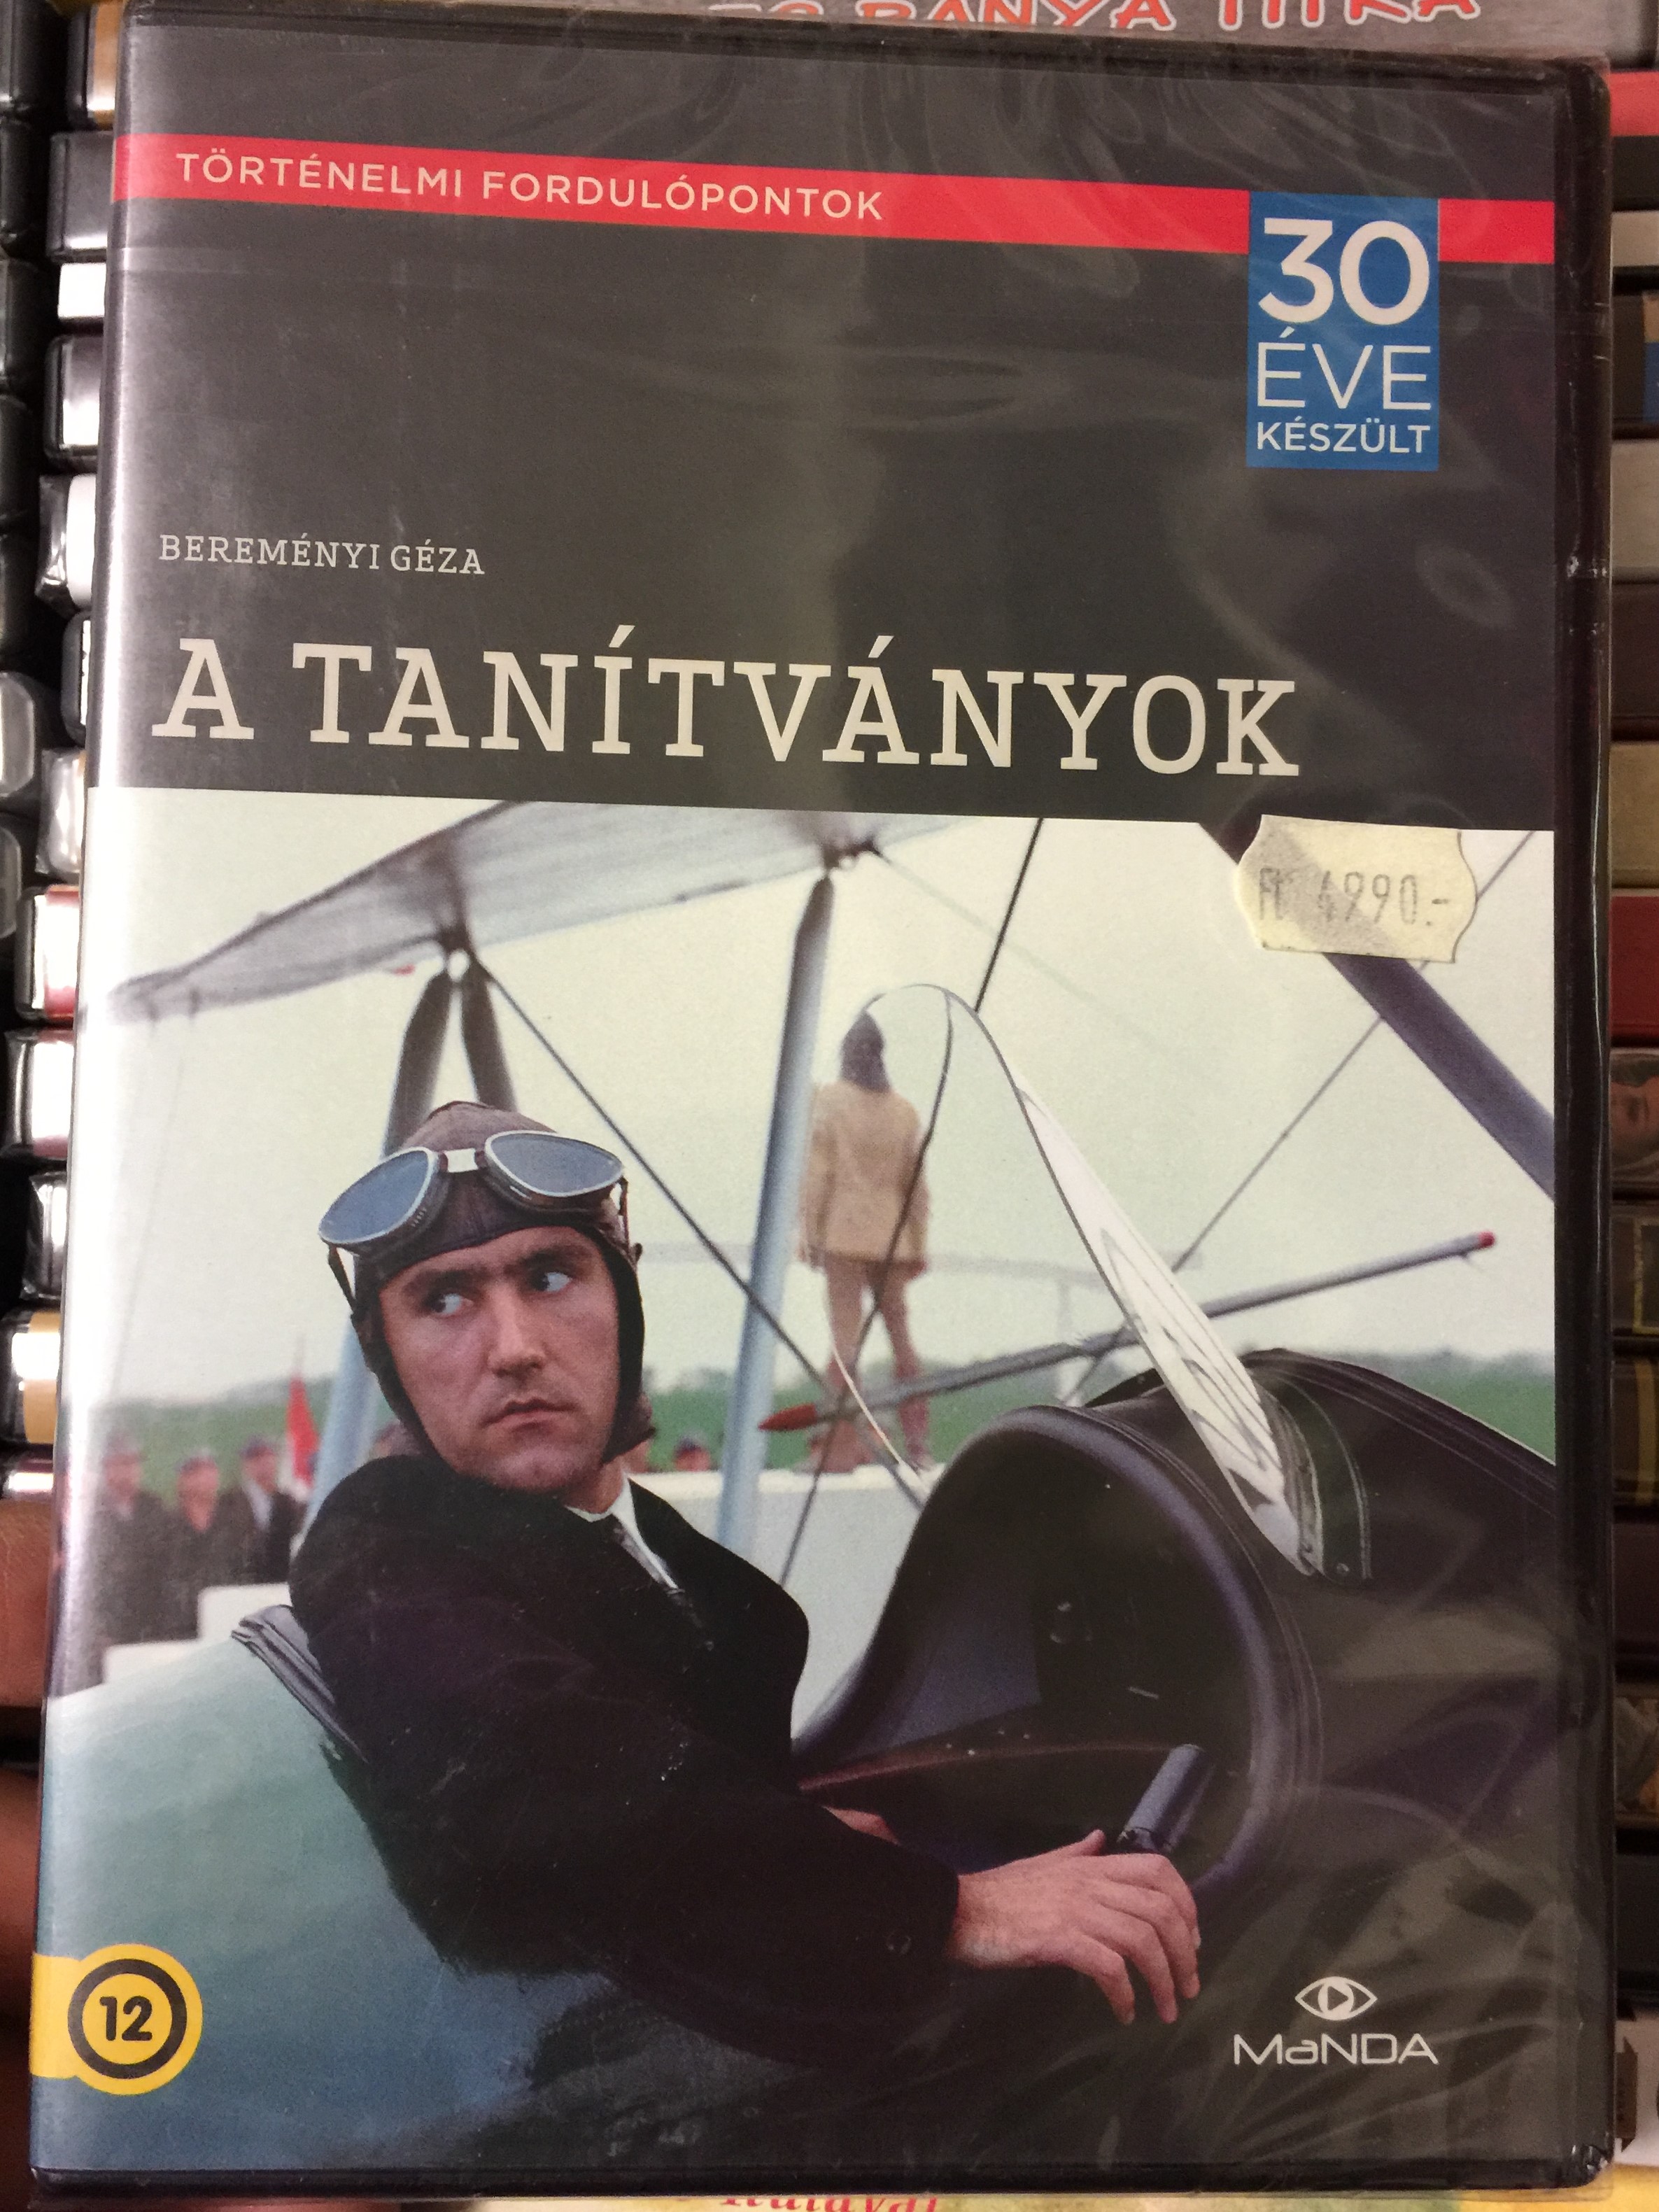 a-tan-tv-nyok-dvd-1985-the-disciples-directed-by-berem-nyi-g-za-1.jpg